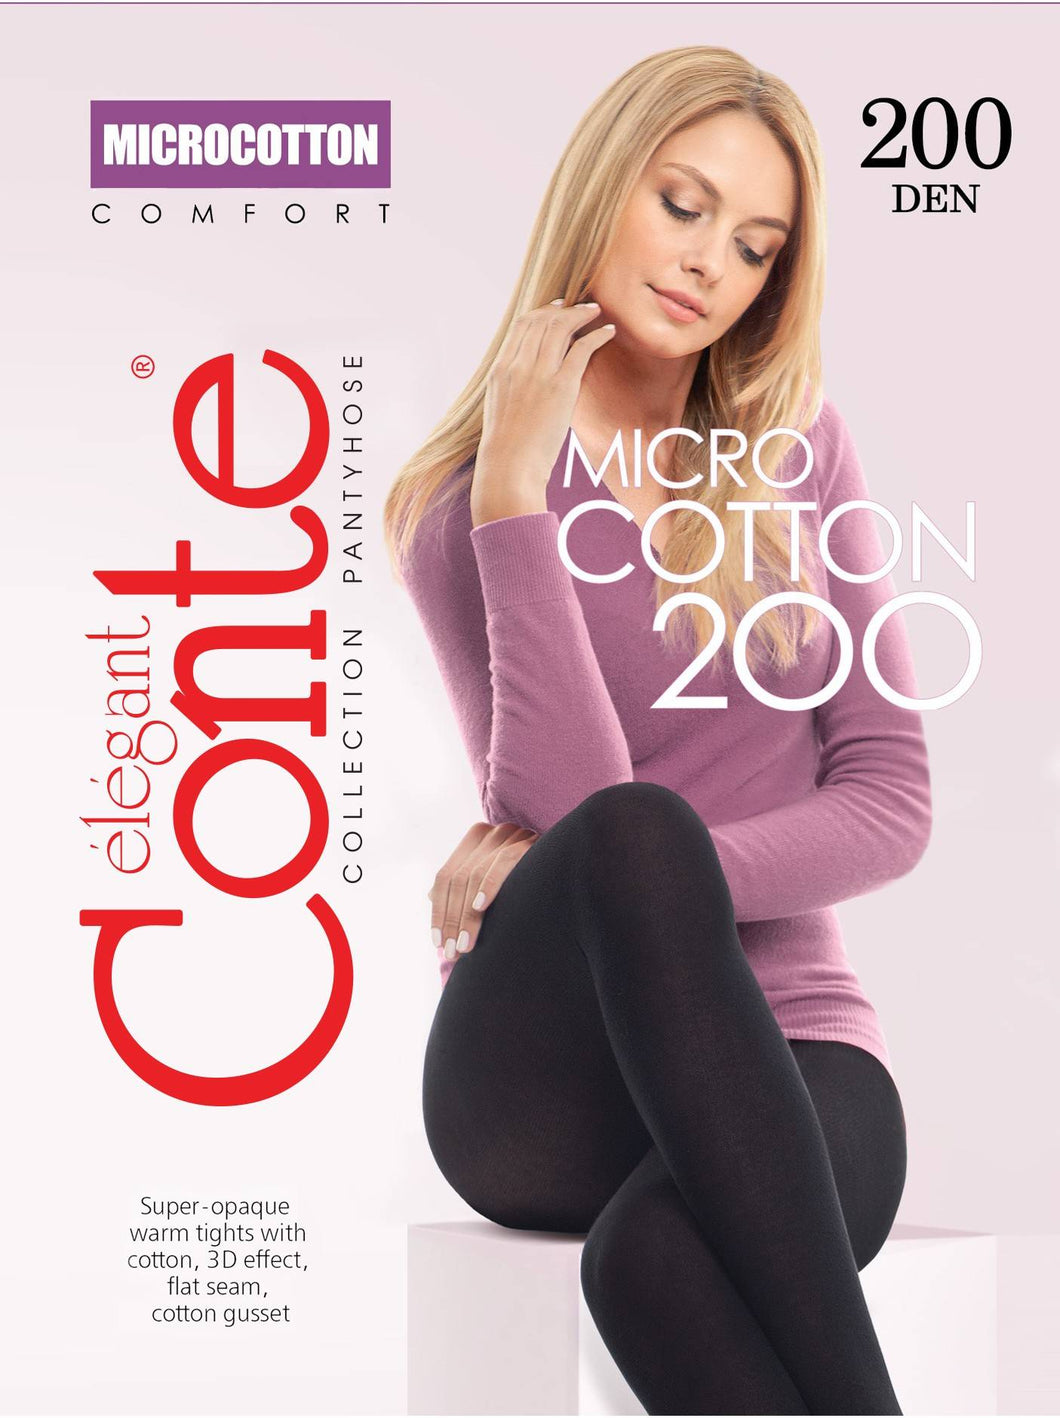 Conte Microcotton 200 Den - Cotton Warm Opaque Women's Tights (18С-70СП)